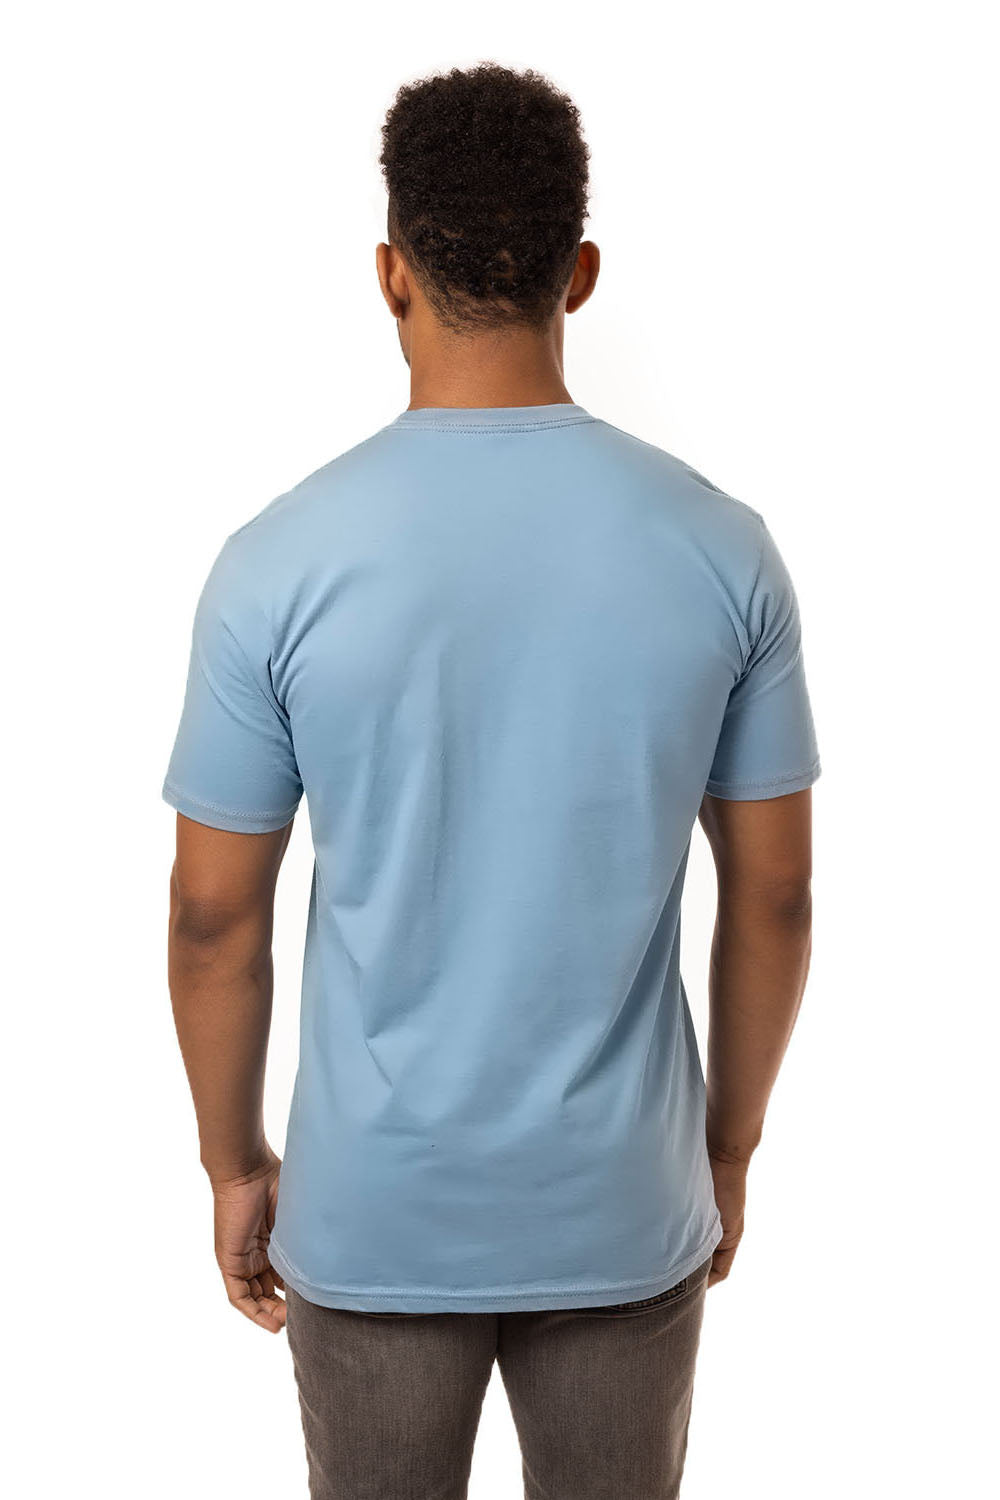 Econscious EC1075 Mens Short Sleeve Crewneck T-Shirt Niagara Blue Back